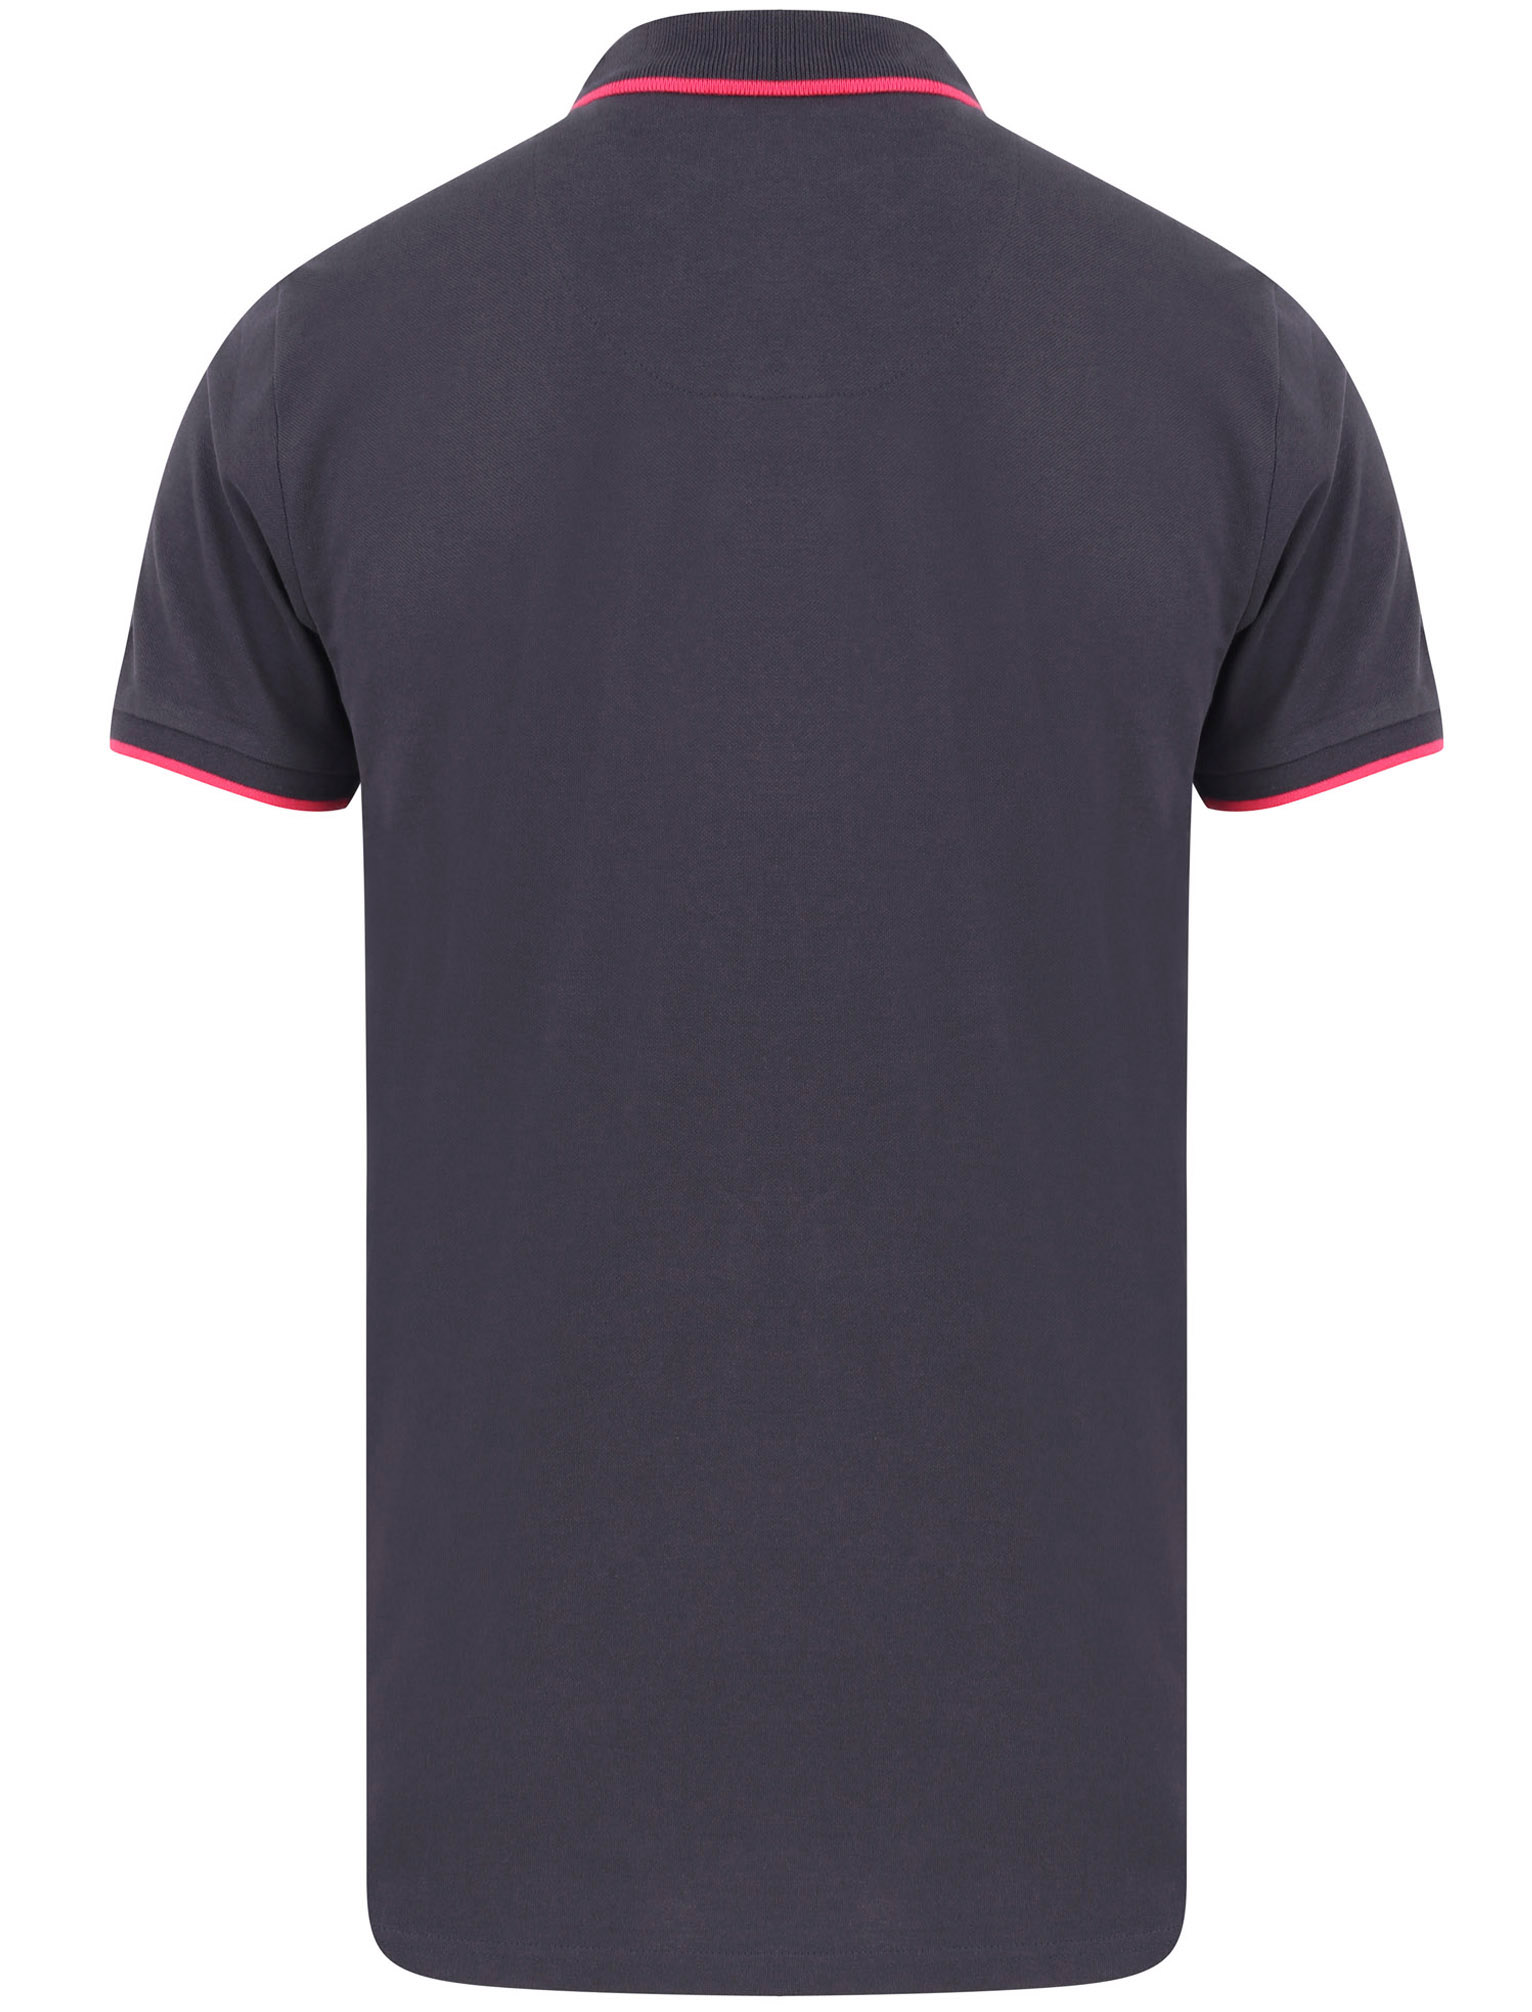 Tokyo Laundry Polo Shirt Men's 100% Cotton Pique T-Shirt Top Short ...